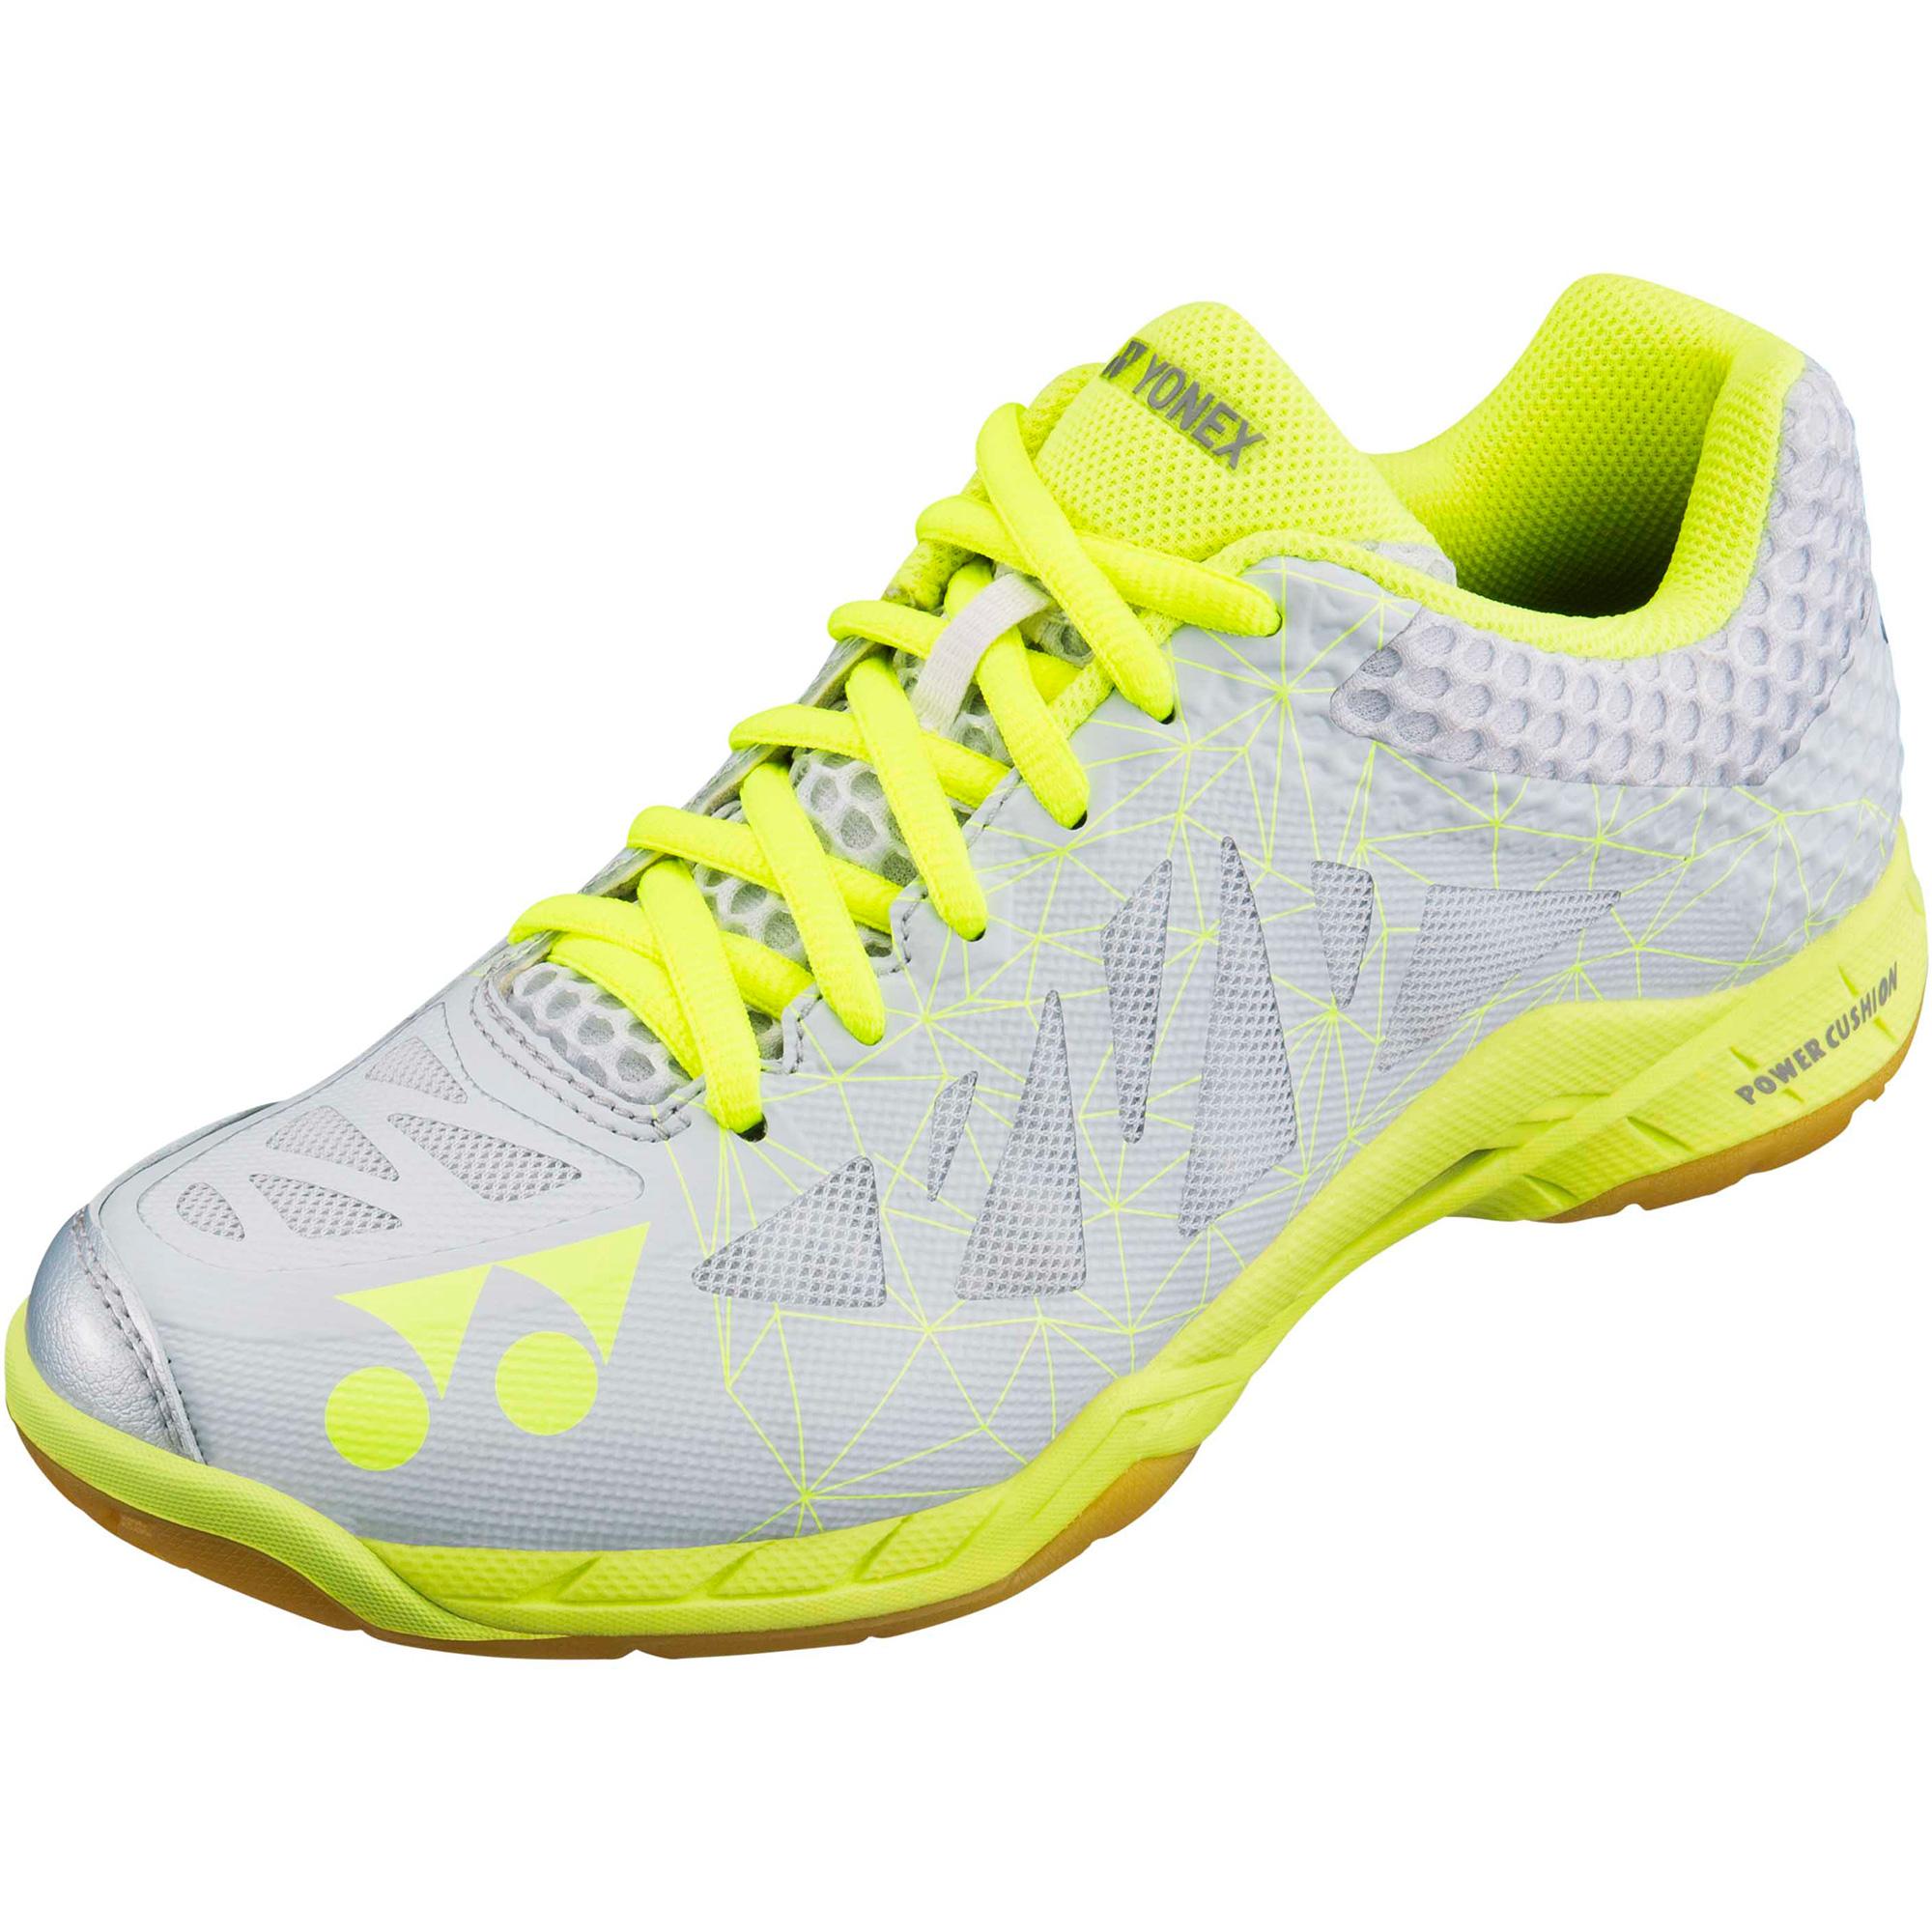 yellow badminton shoes